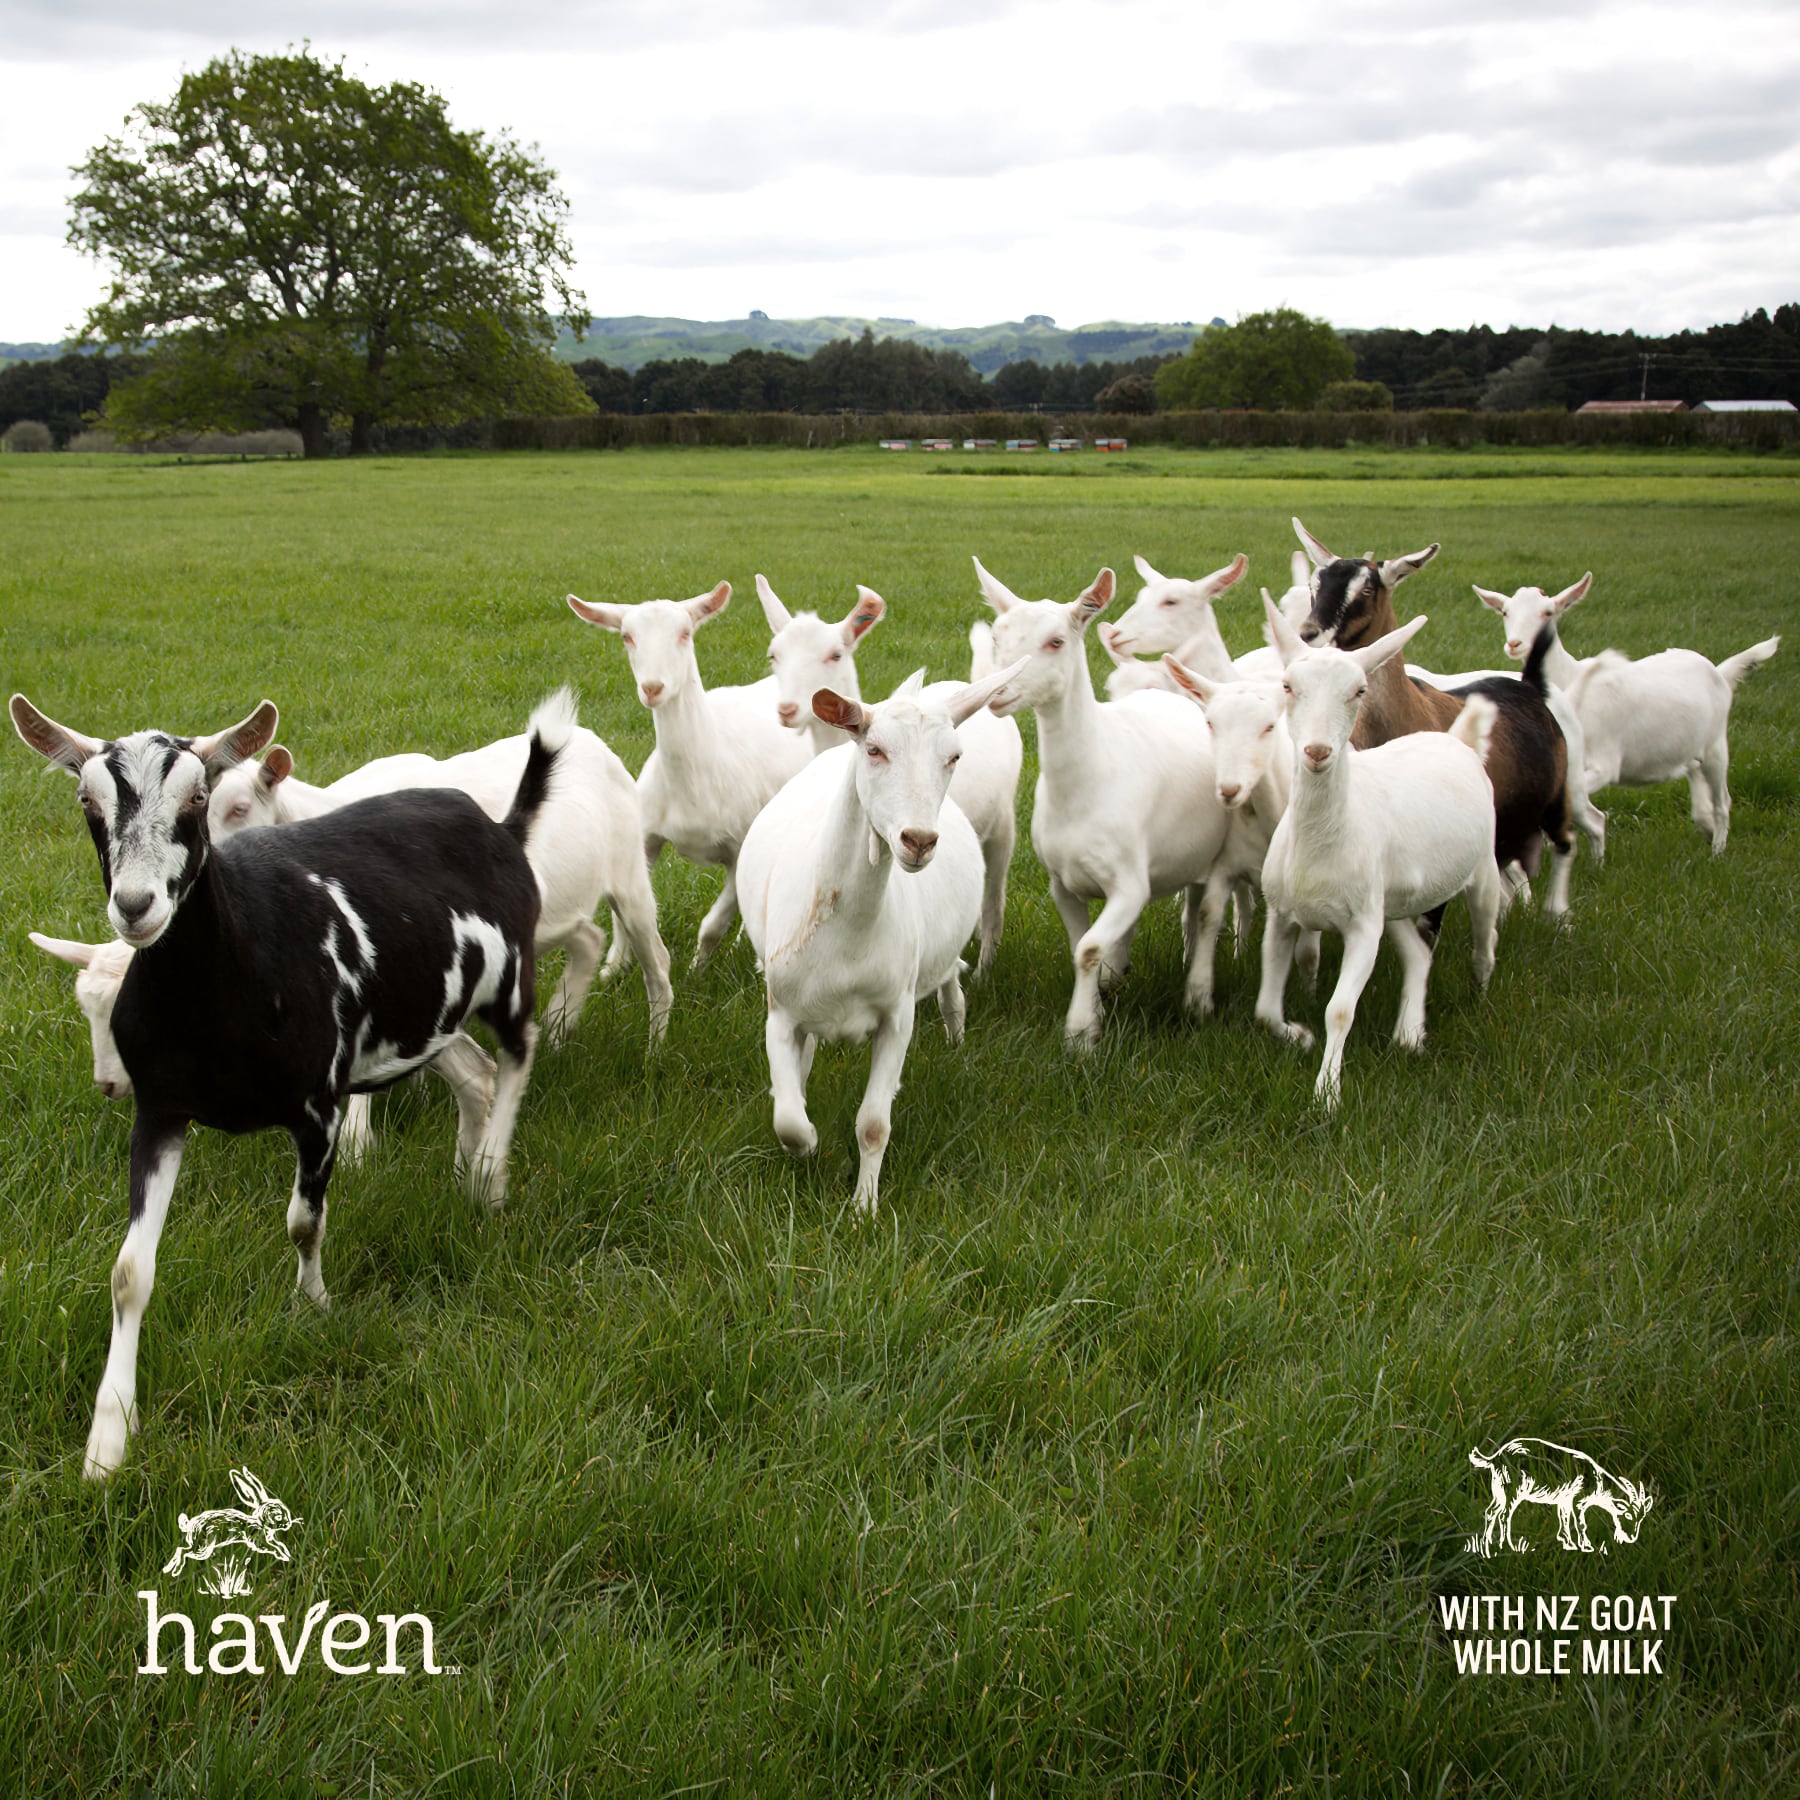 Haven Goat Follow-On Formula